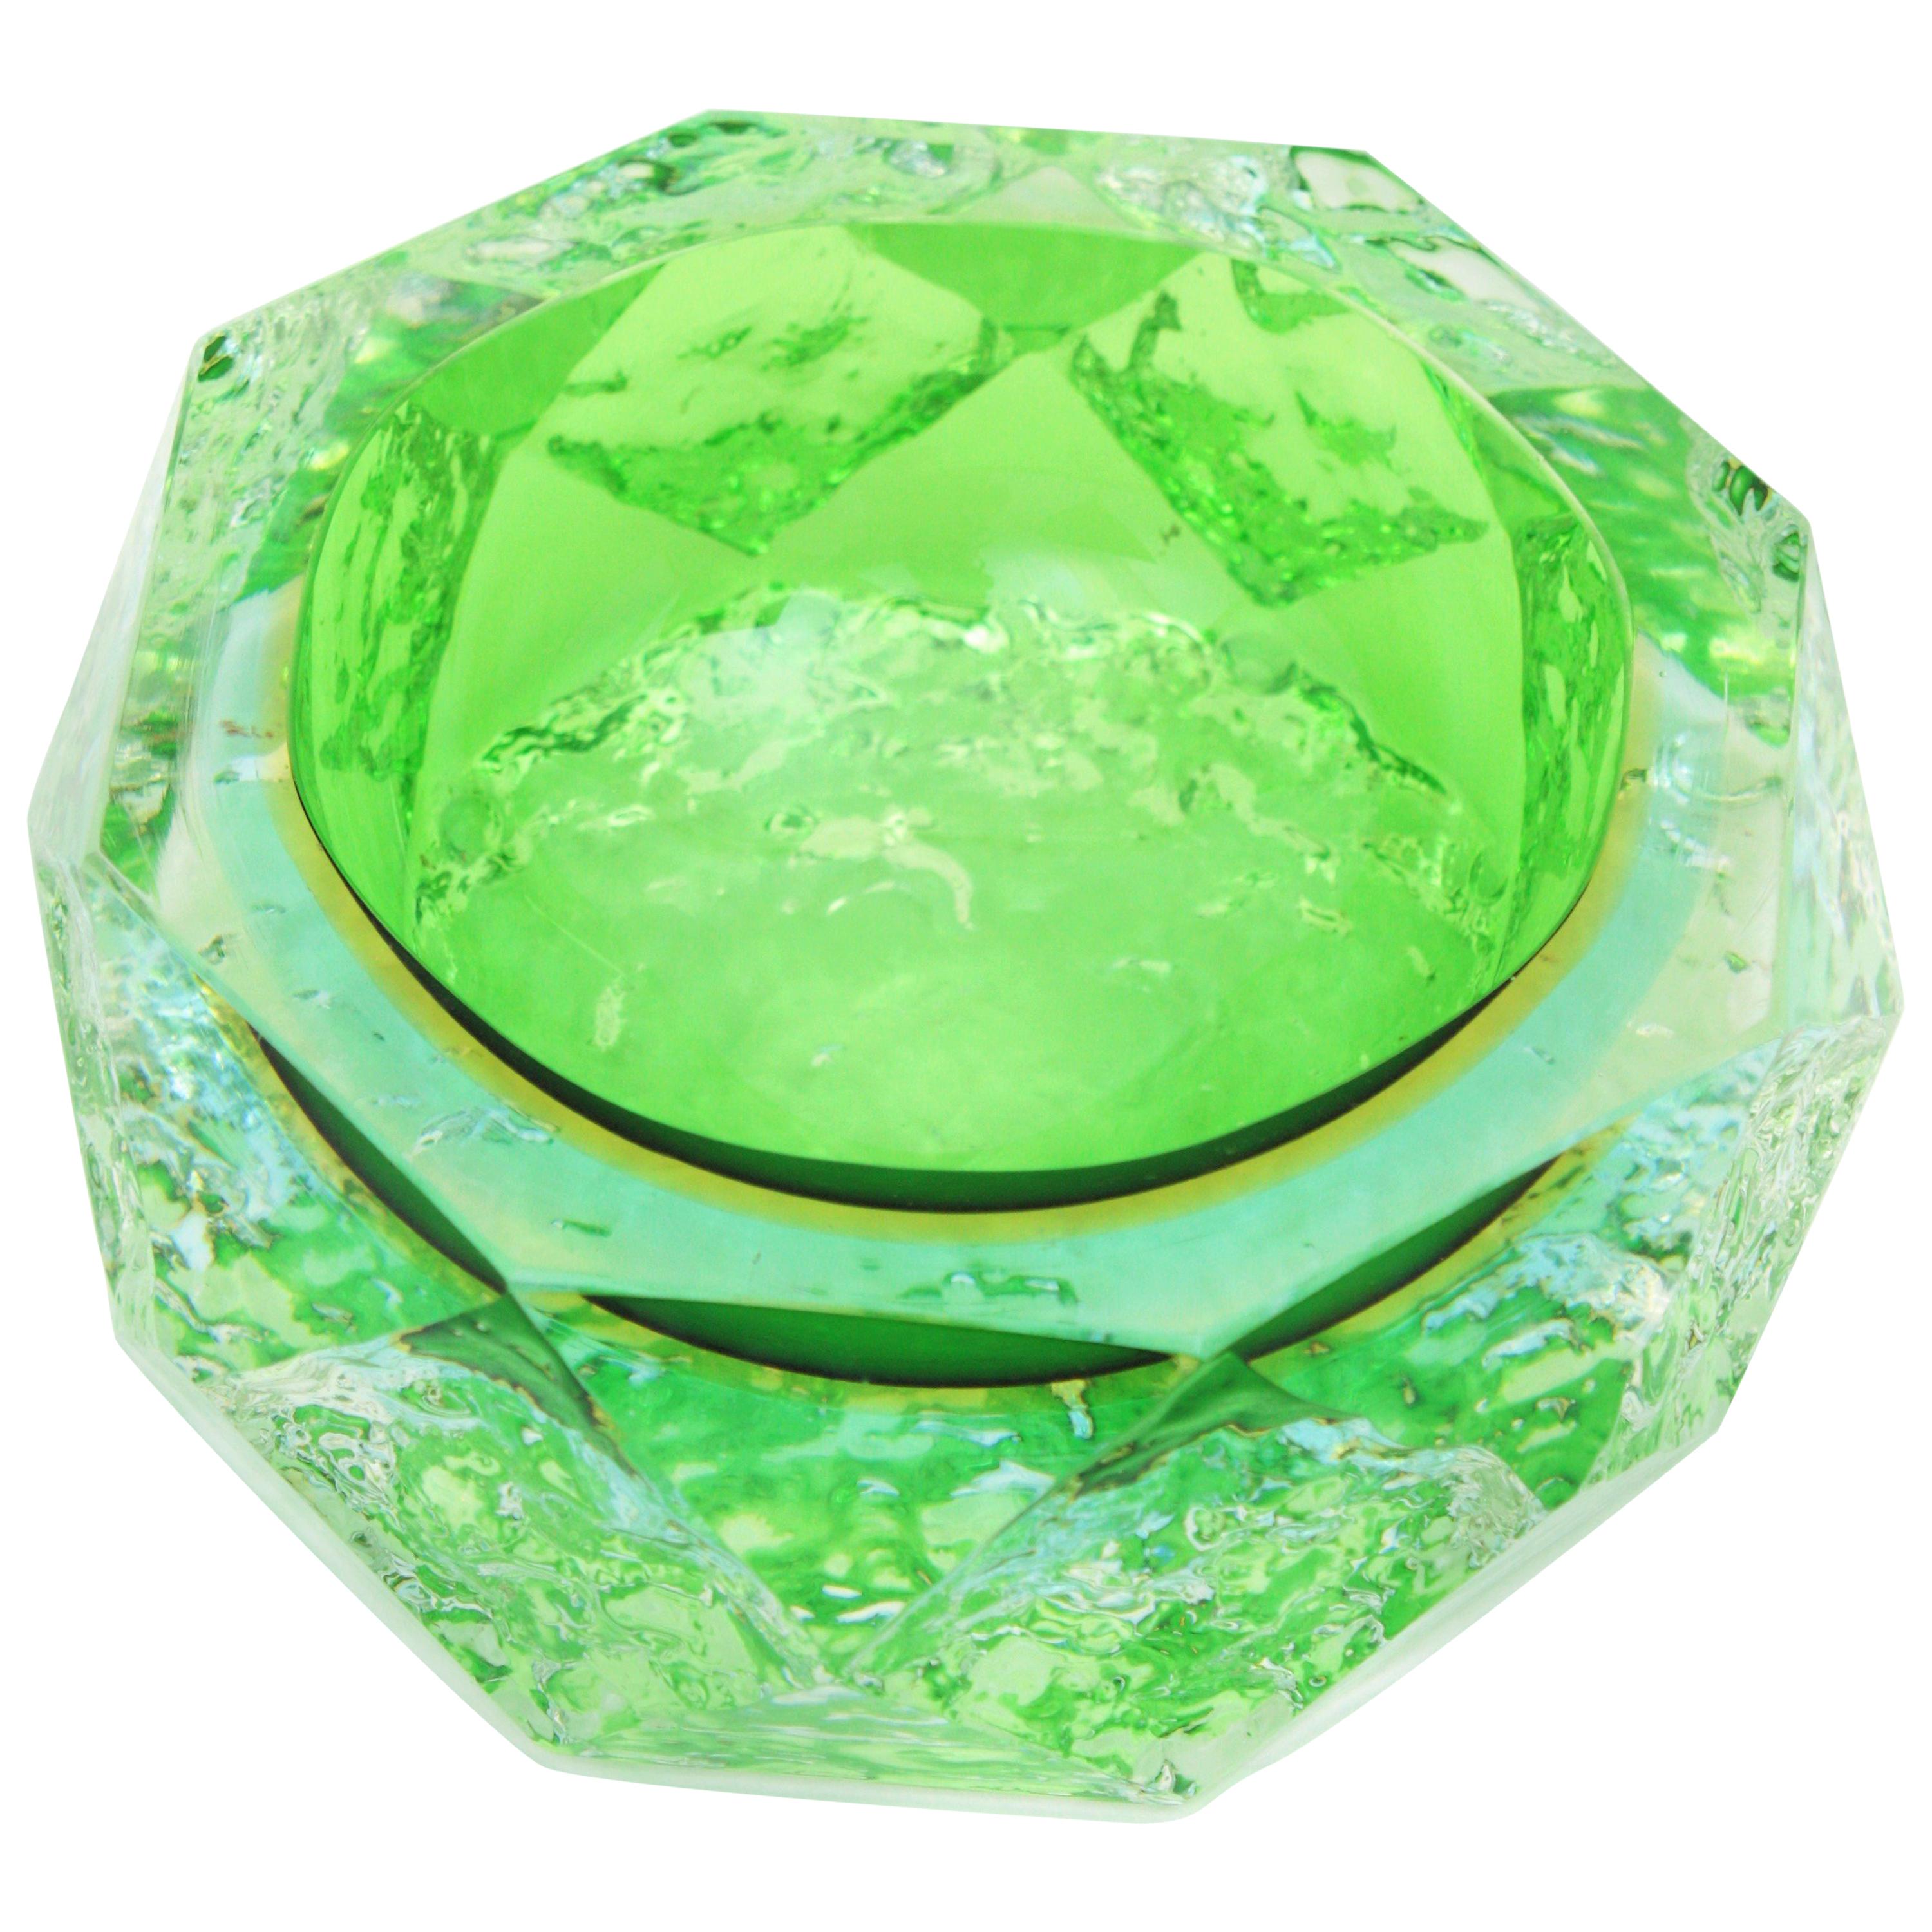 Mandruzzato Murano Ice Glass Faceted Sommerso Green Blue Yellow Art Glass Bowl